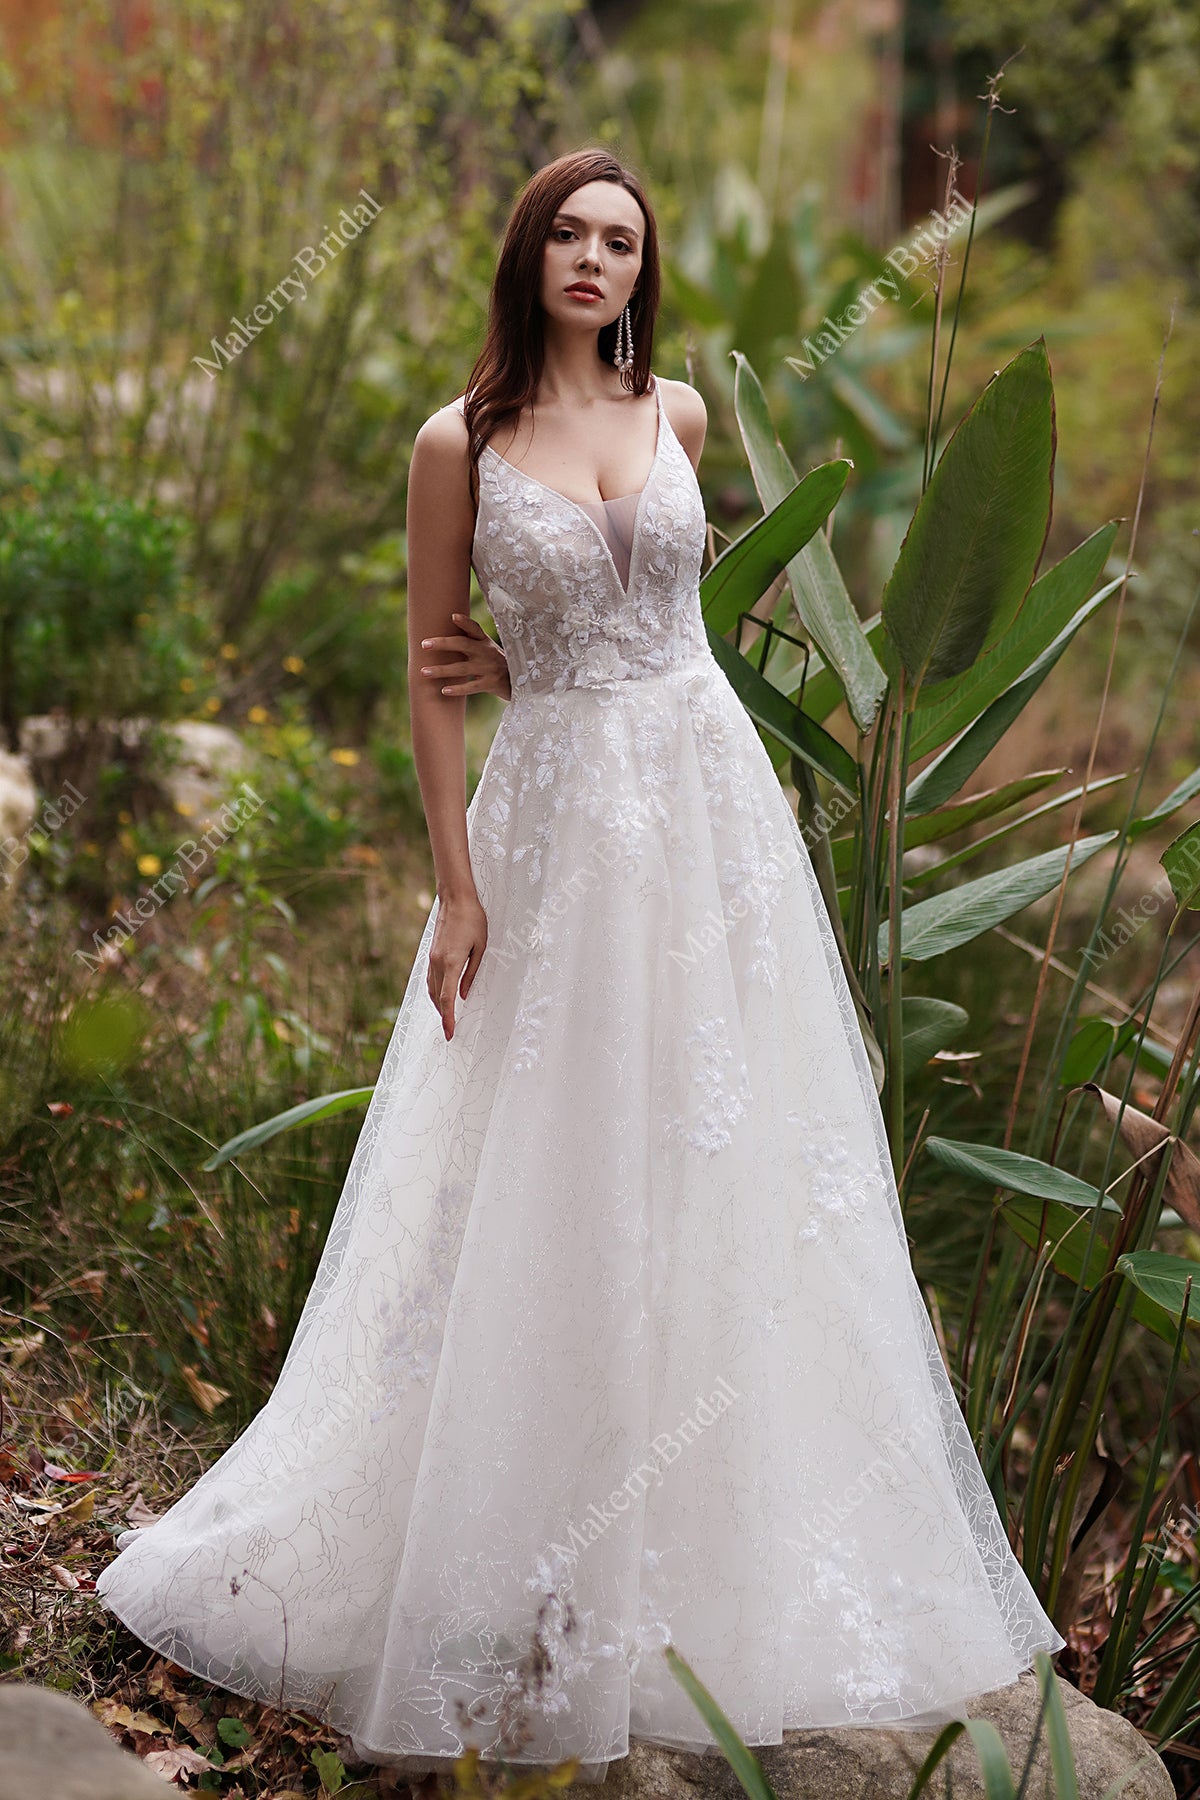 A Precious And Timeless Wedding Dress – MakerryBridal